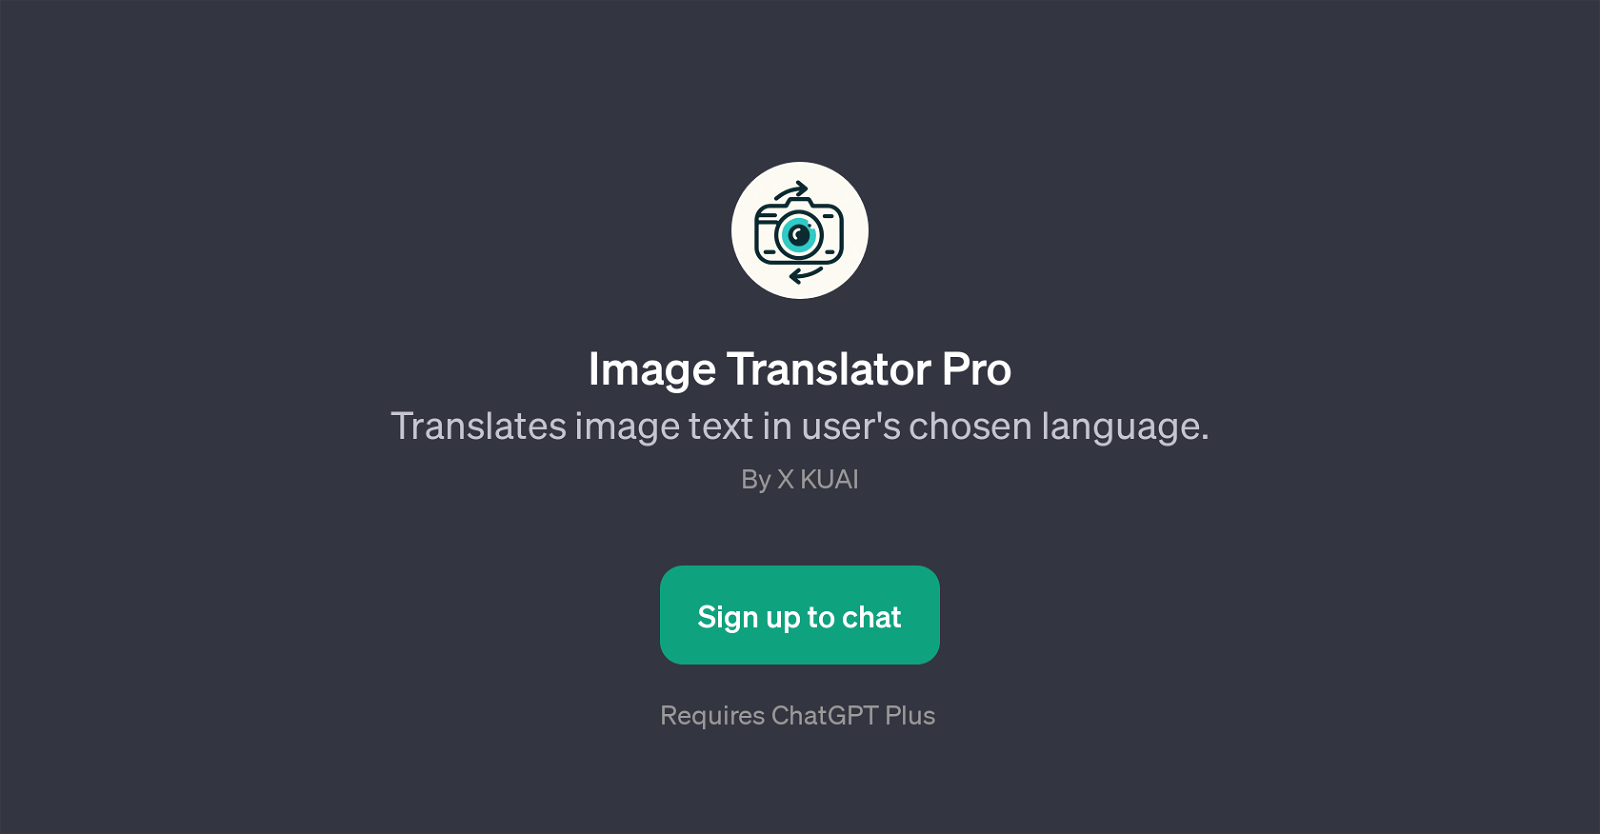 Image Translator Pro website